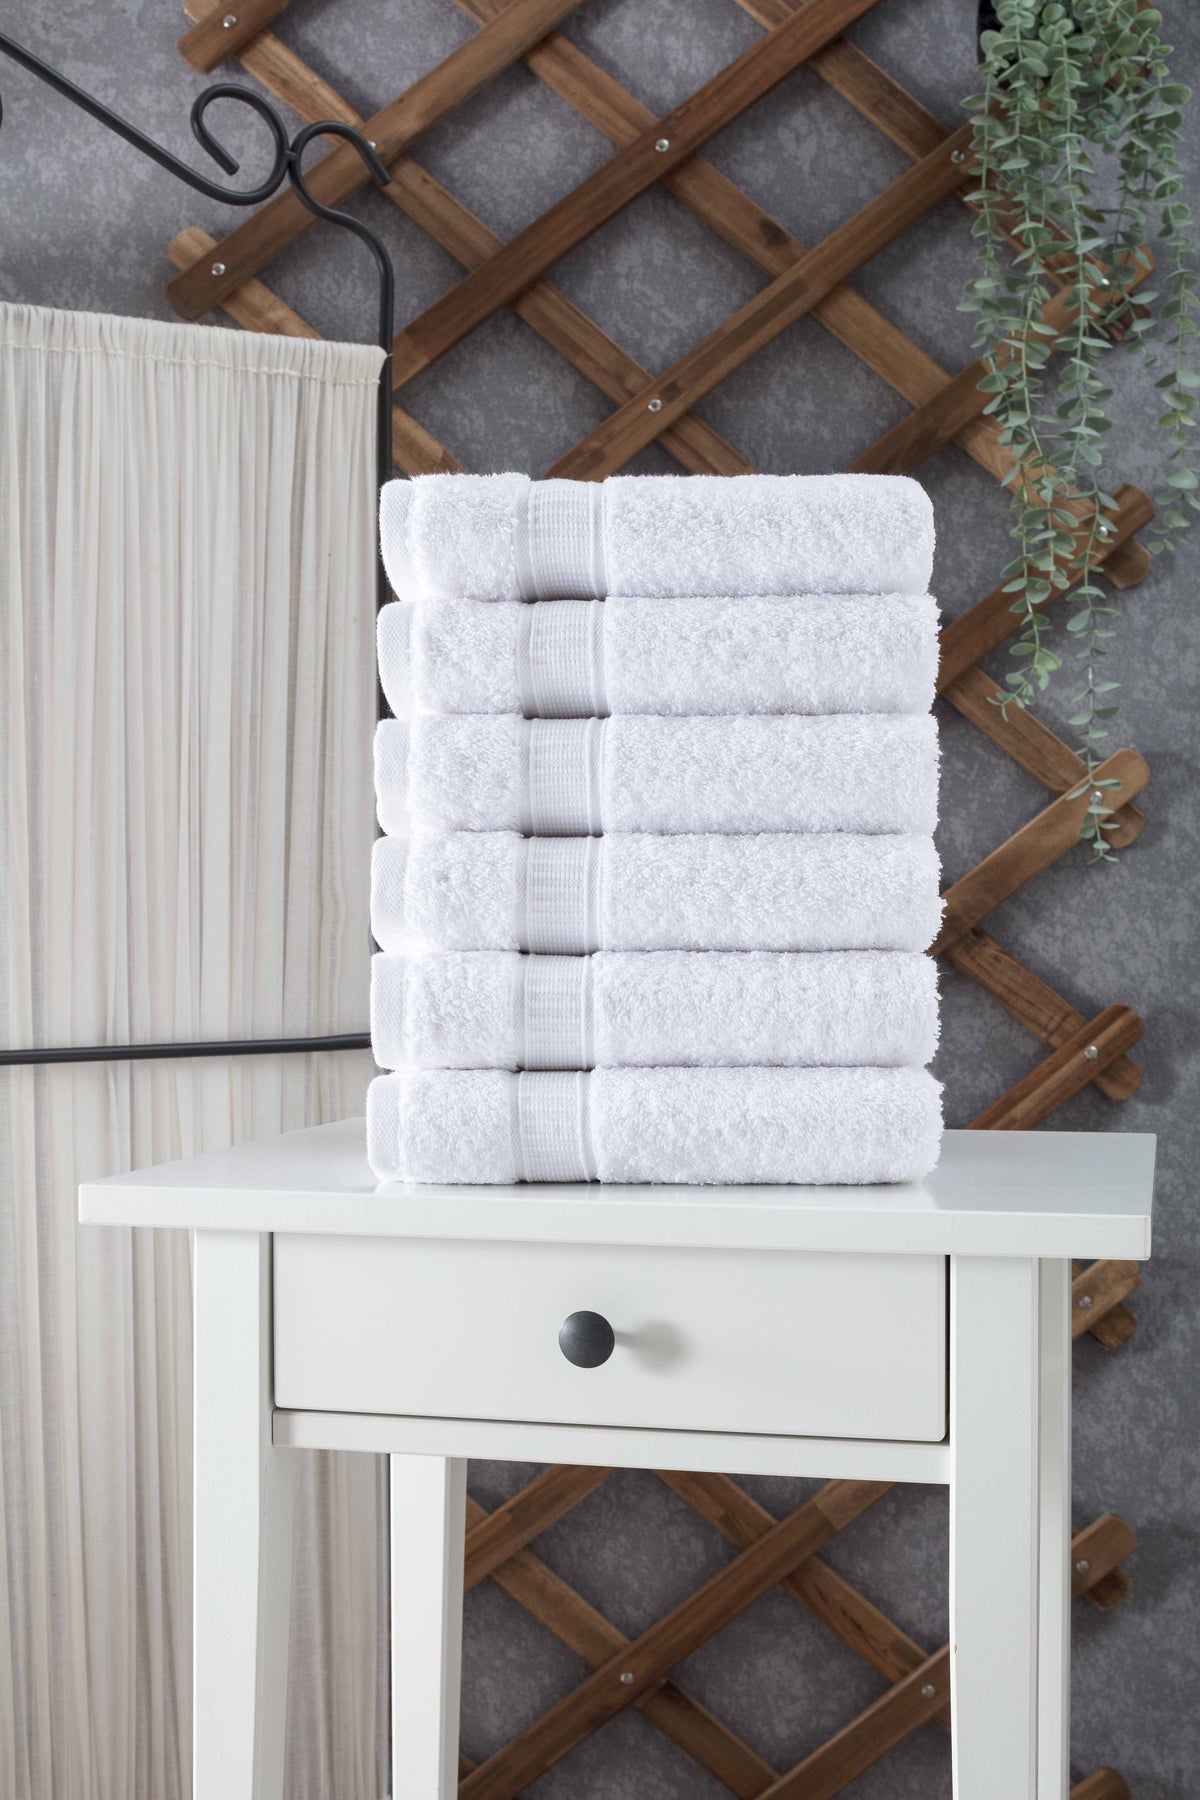 Turkish Cotton Hand Towel Set of 6